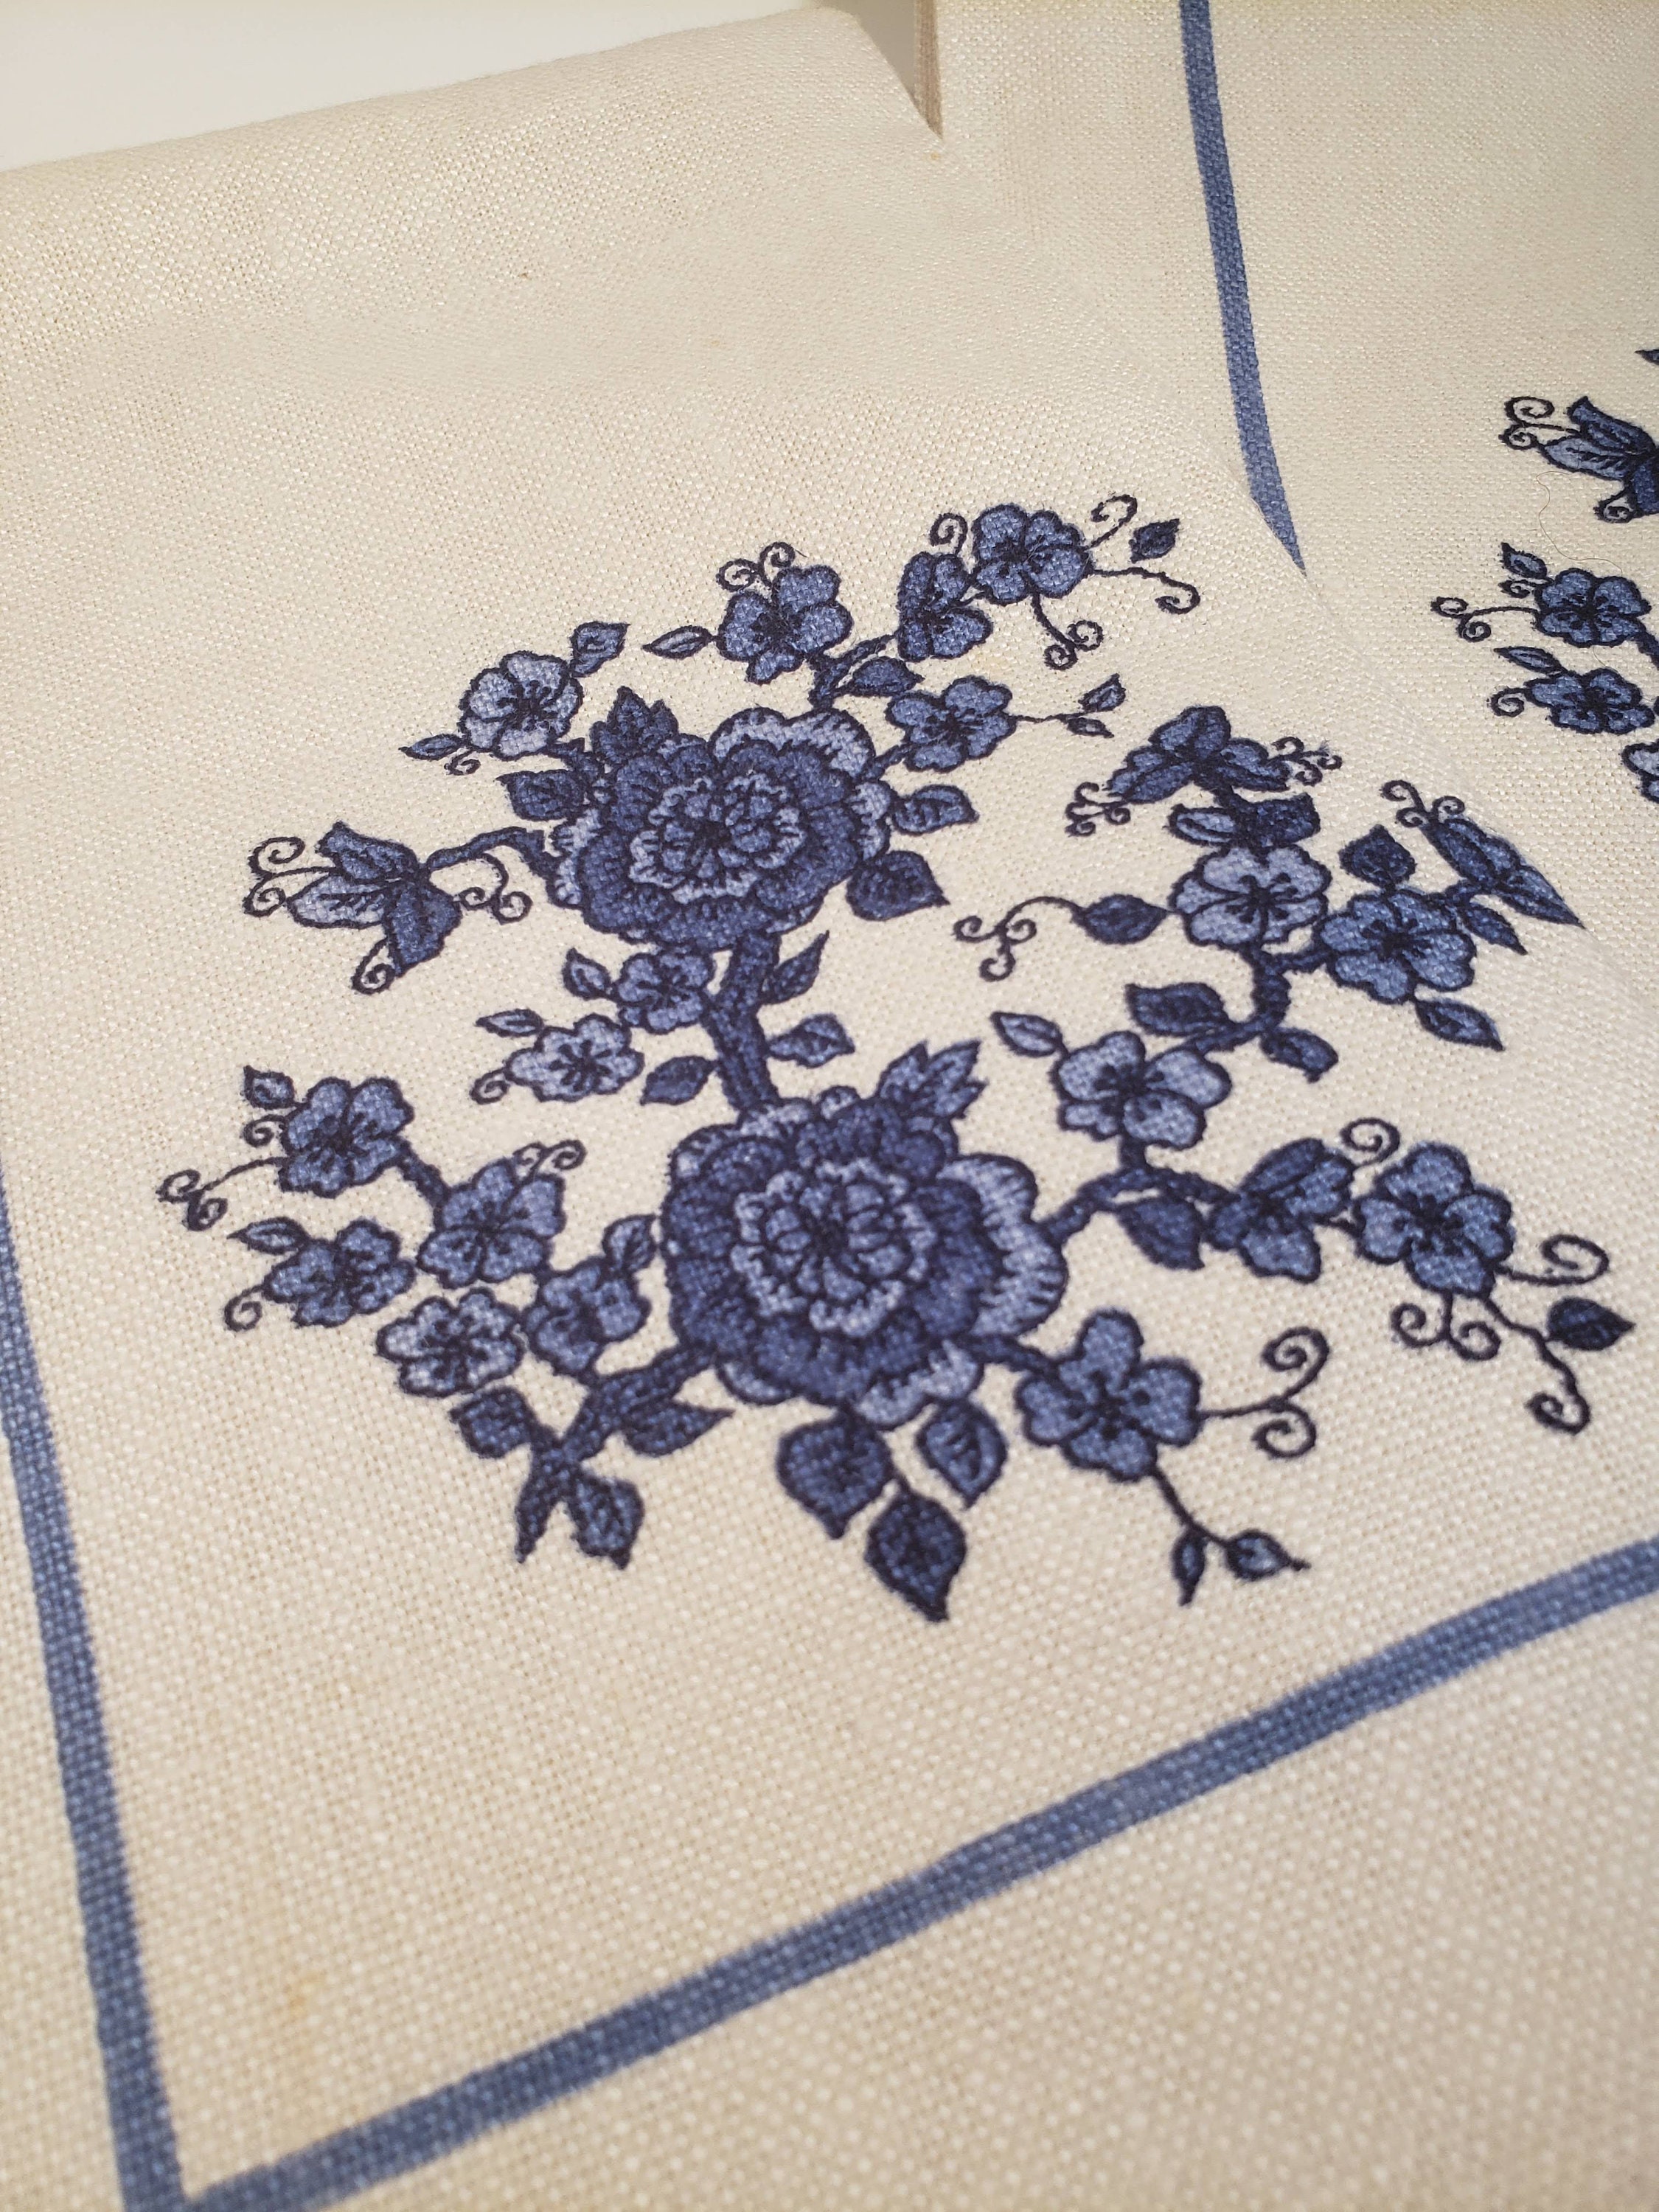 3 Vintage Cotton/Linen Blend Rectangle Napkins Or Placemats With Blue Flowers